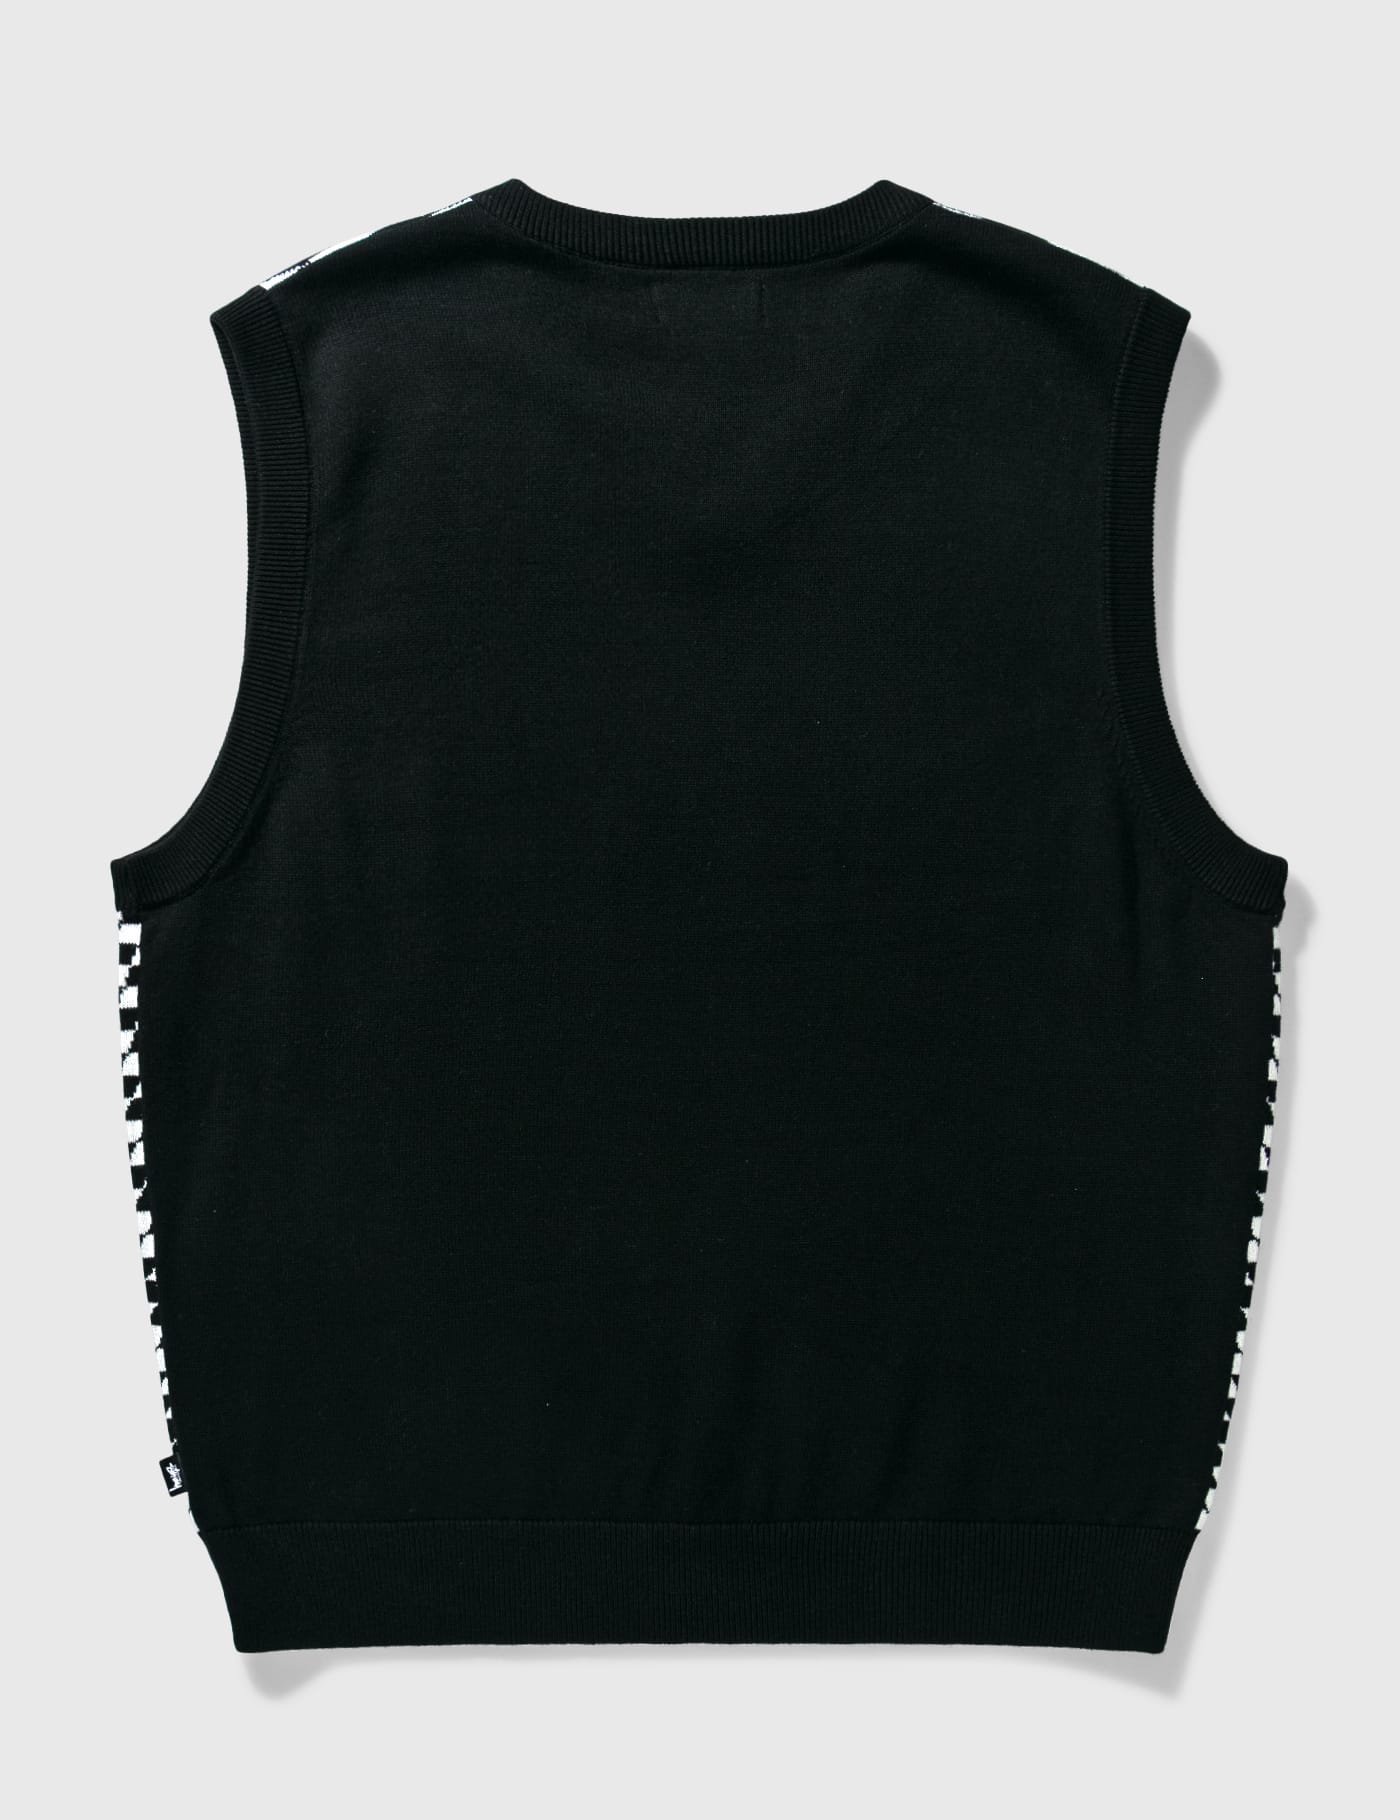 Stüssy - Psychedelic Check Vest | HBX - Globally Curated Fashion 